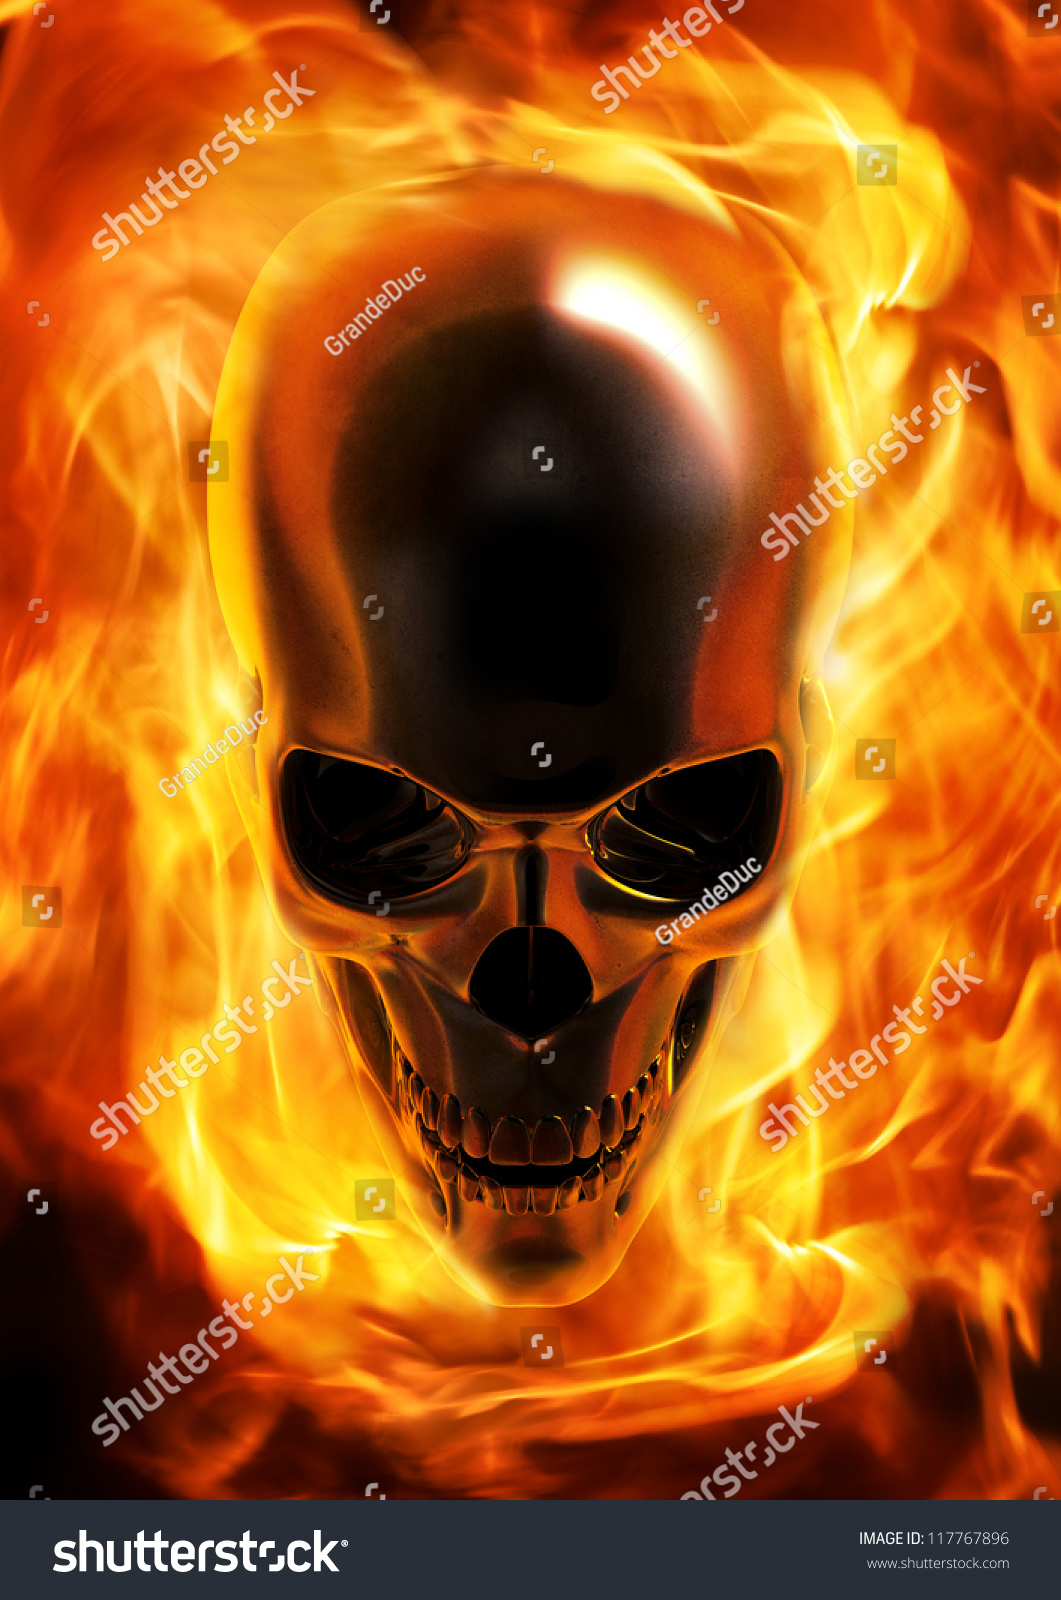 Fire Skull Stock Illustration 117767896 - Shutterstock